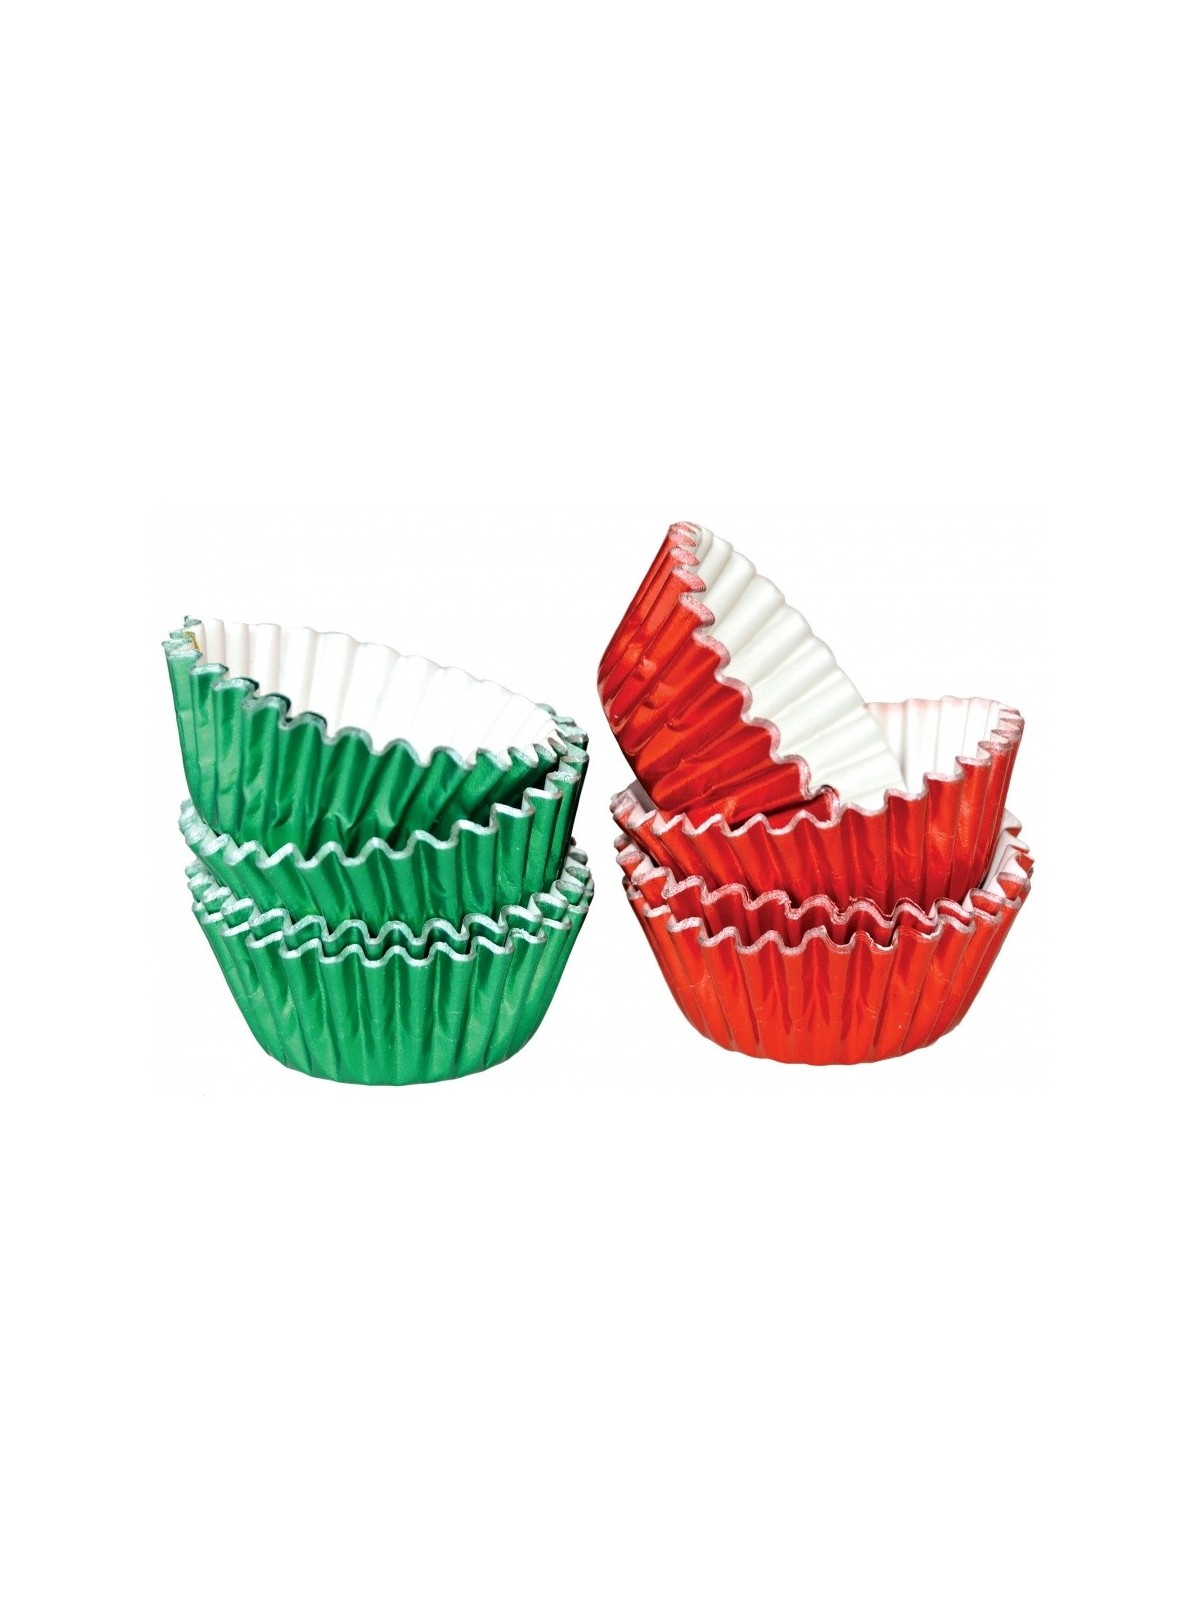 Aluminum pastry MINI baskets 2.5 x 1.7 cm - green / red - 50 pcs